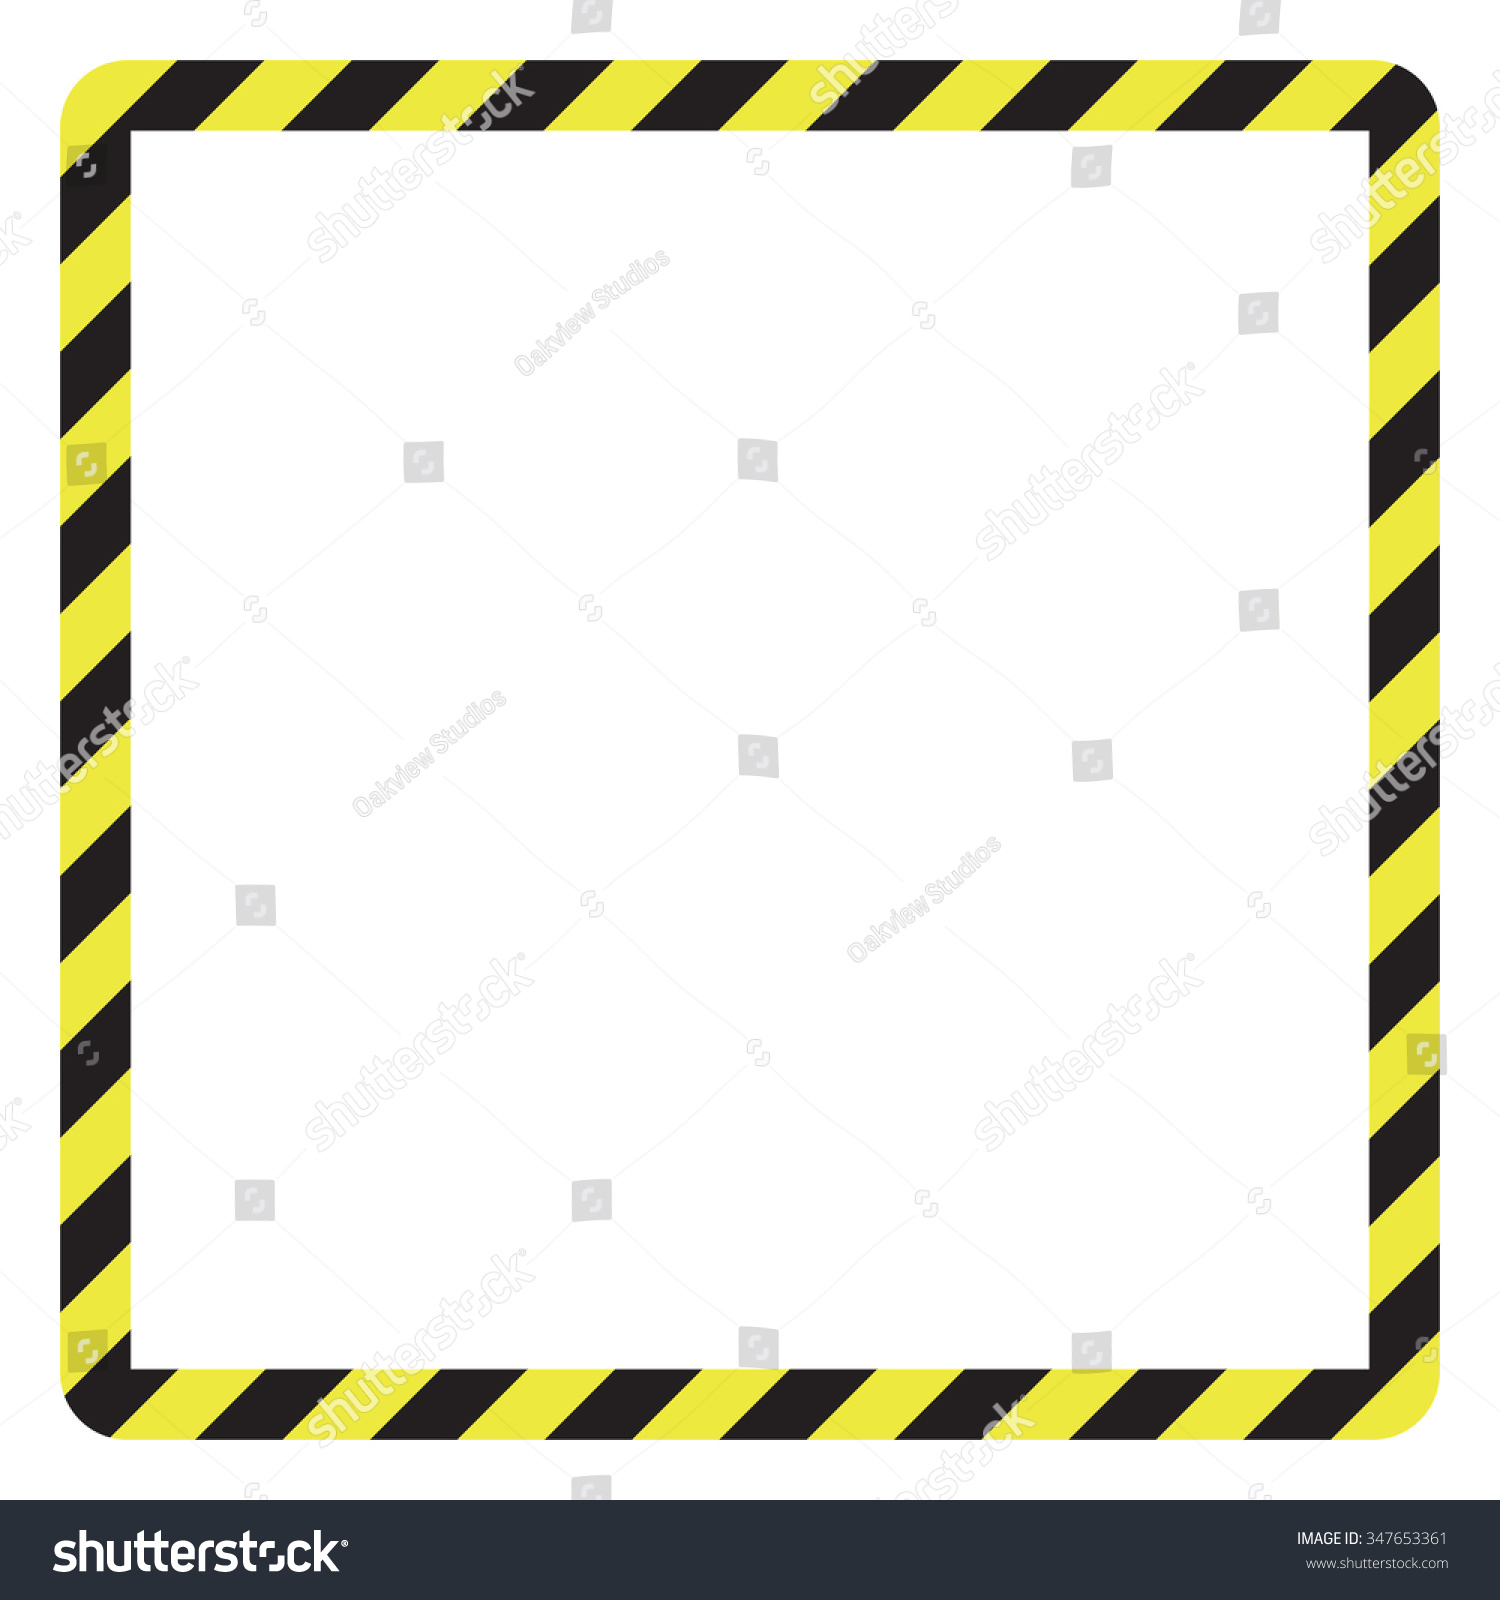 Construction warning border, 